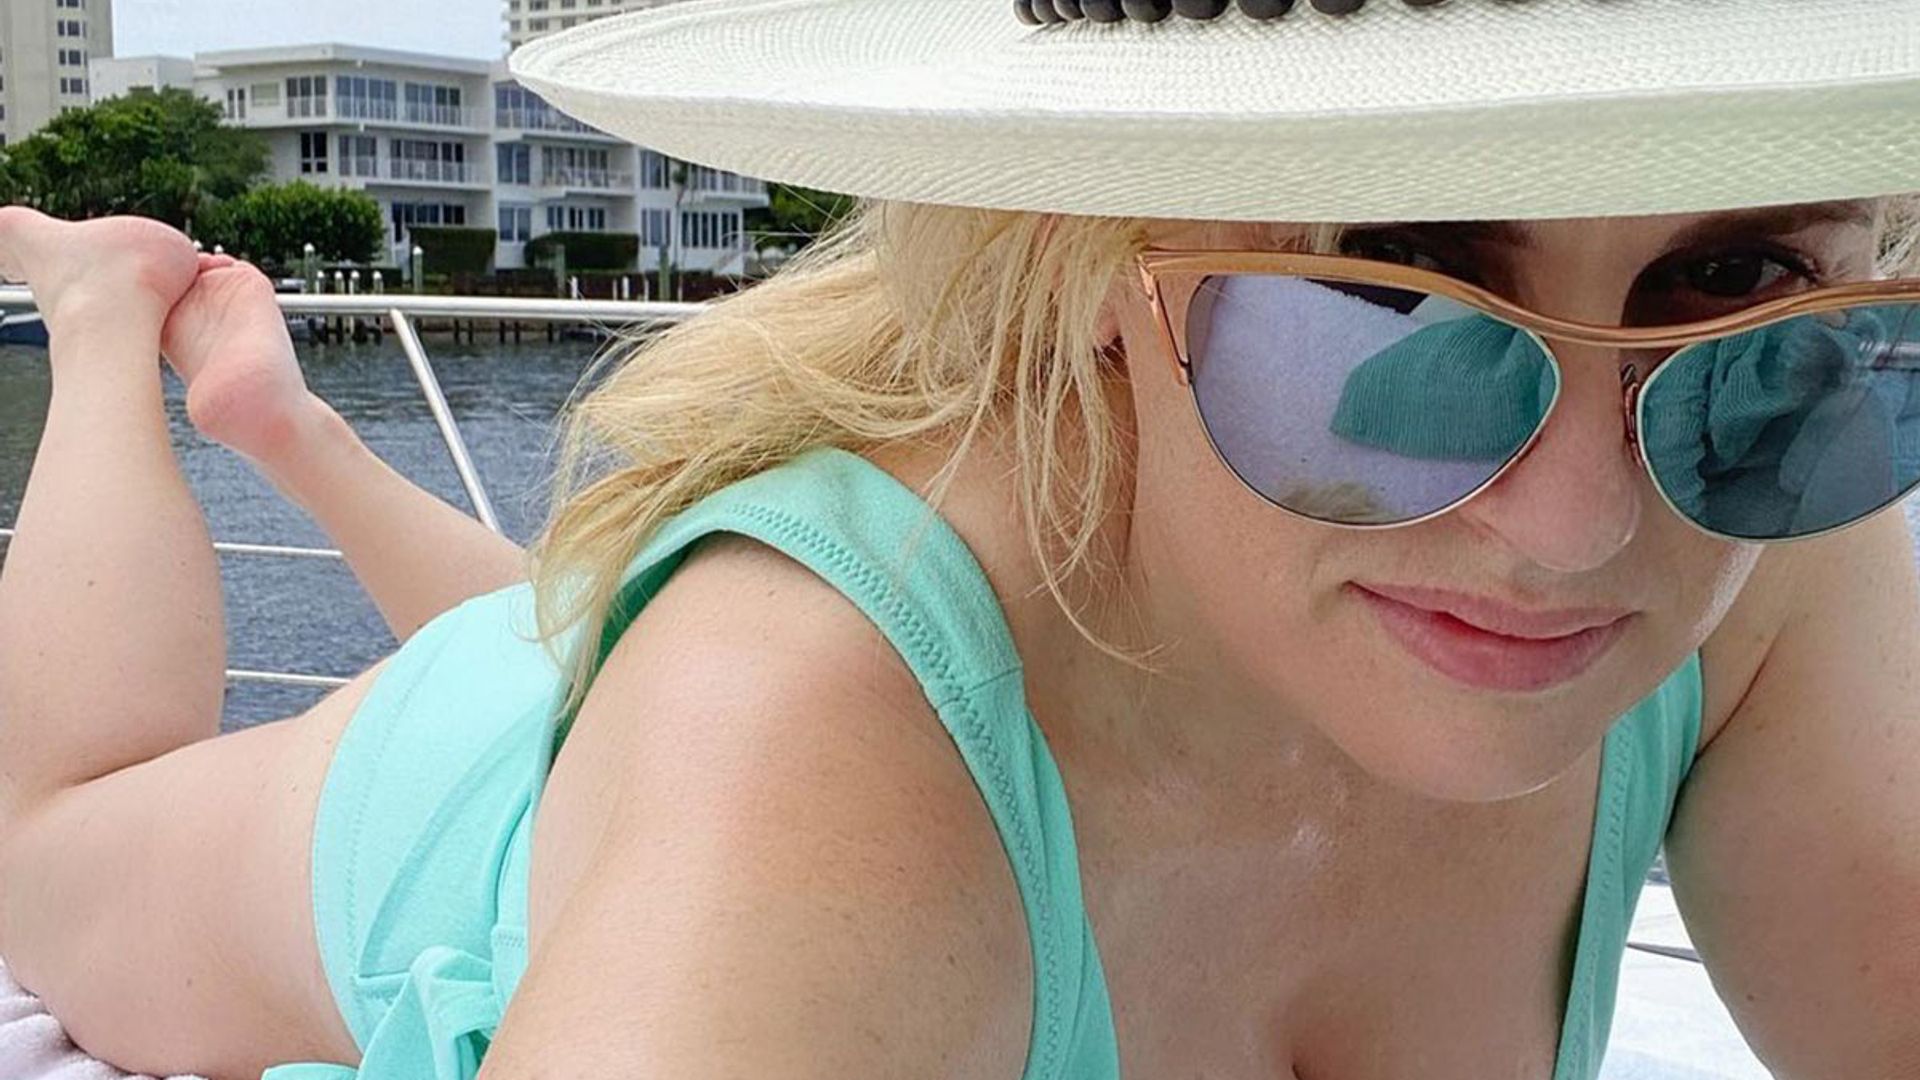 Rebel Wilson shares daring beach selfie in stunning low-cut swimsuit